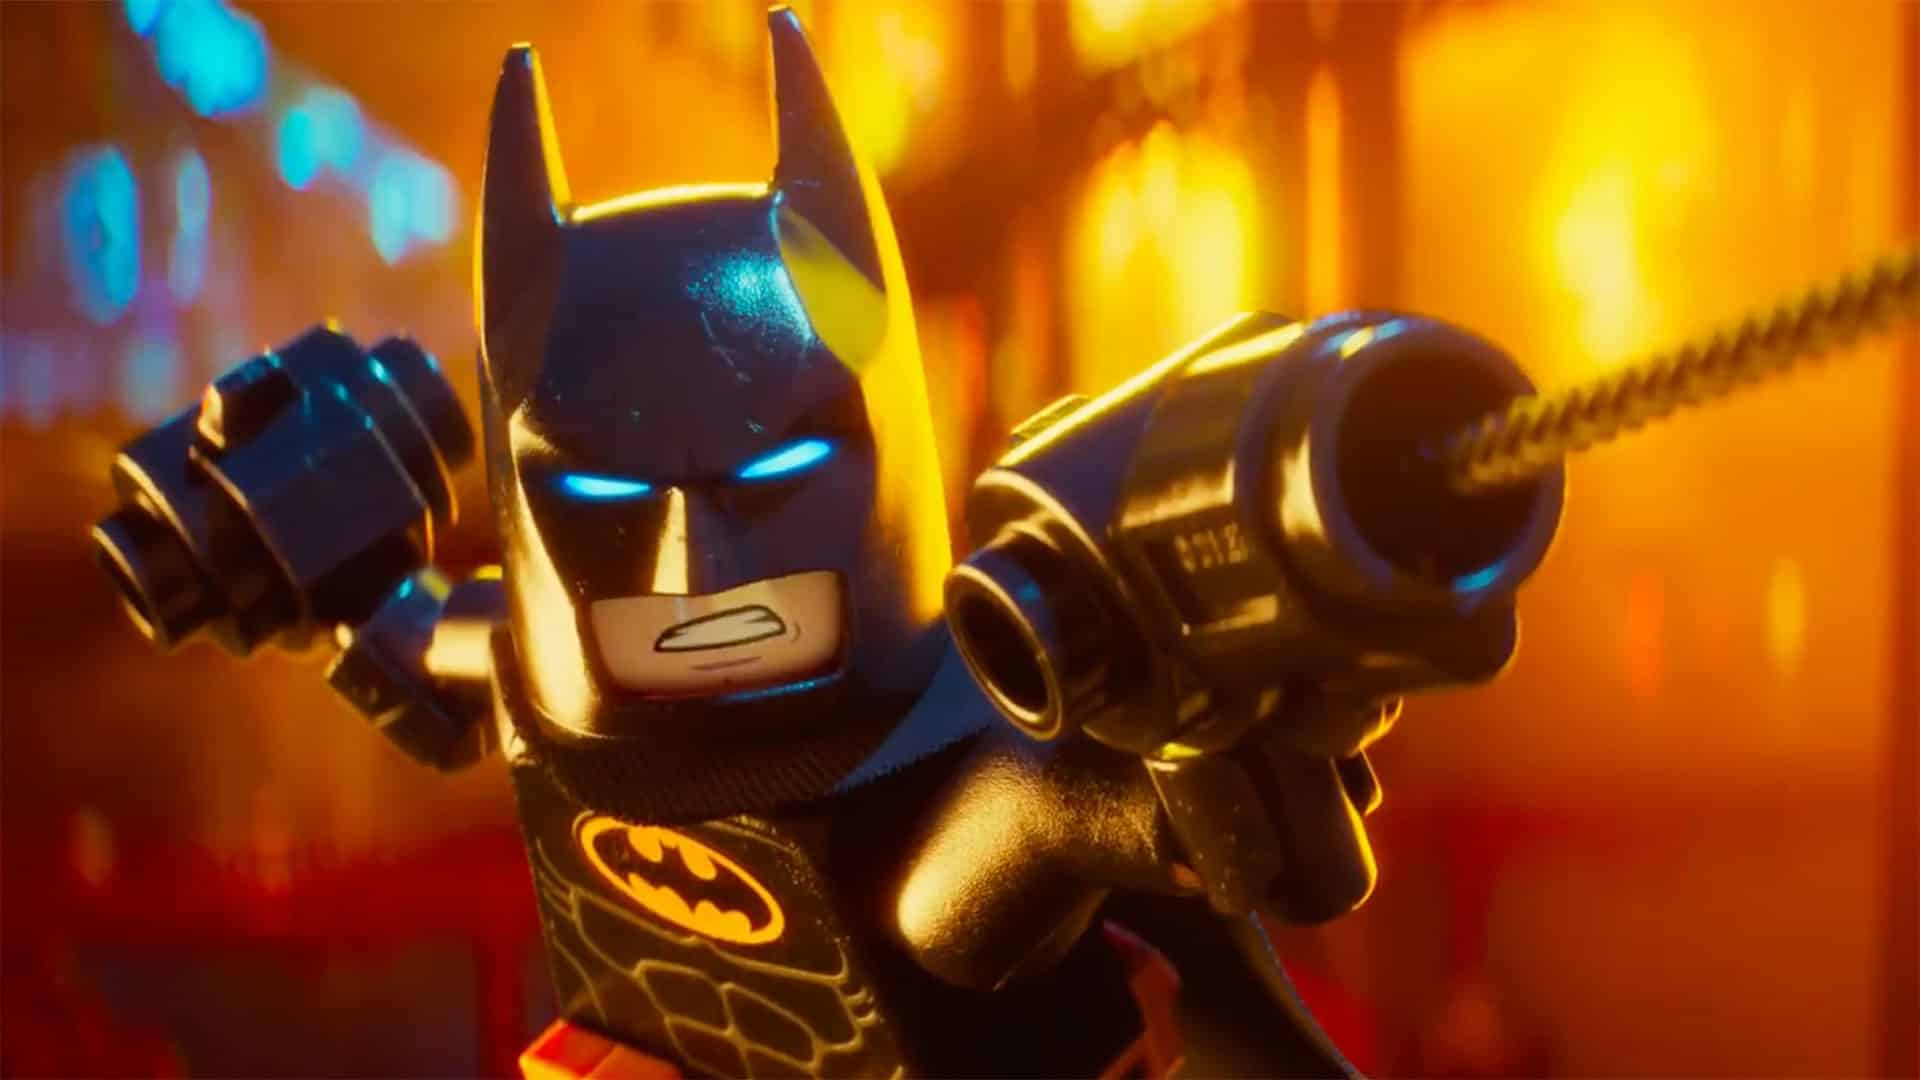 Lego Batman vo filme nesklamal svojho predchodcu!